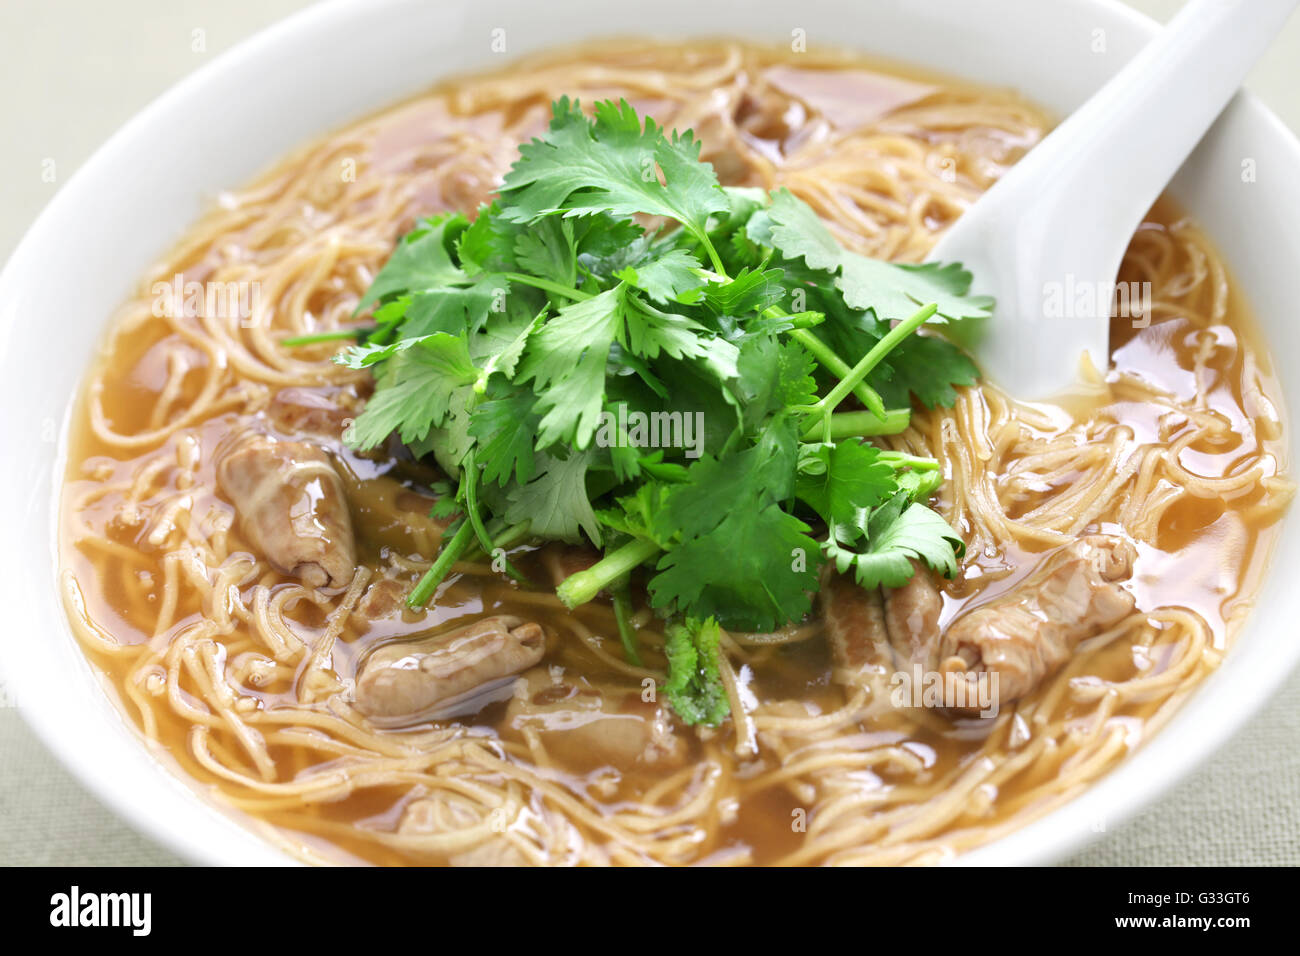 pork large intestine vermicelli soup, Taiwanese noodle cuisine Stock Photo